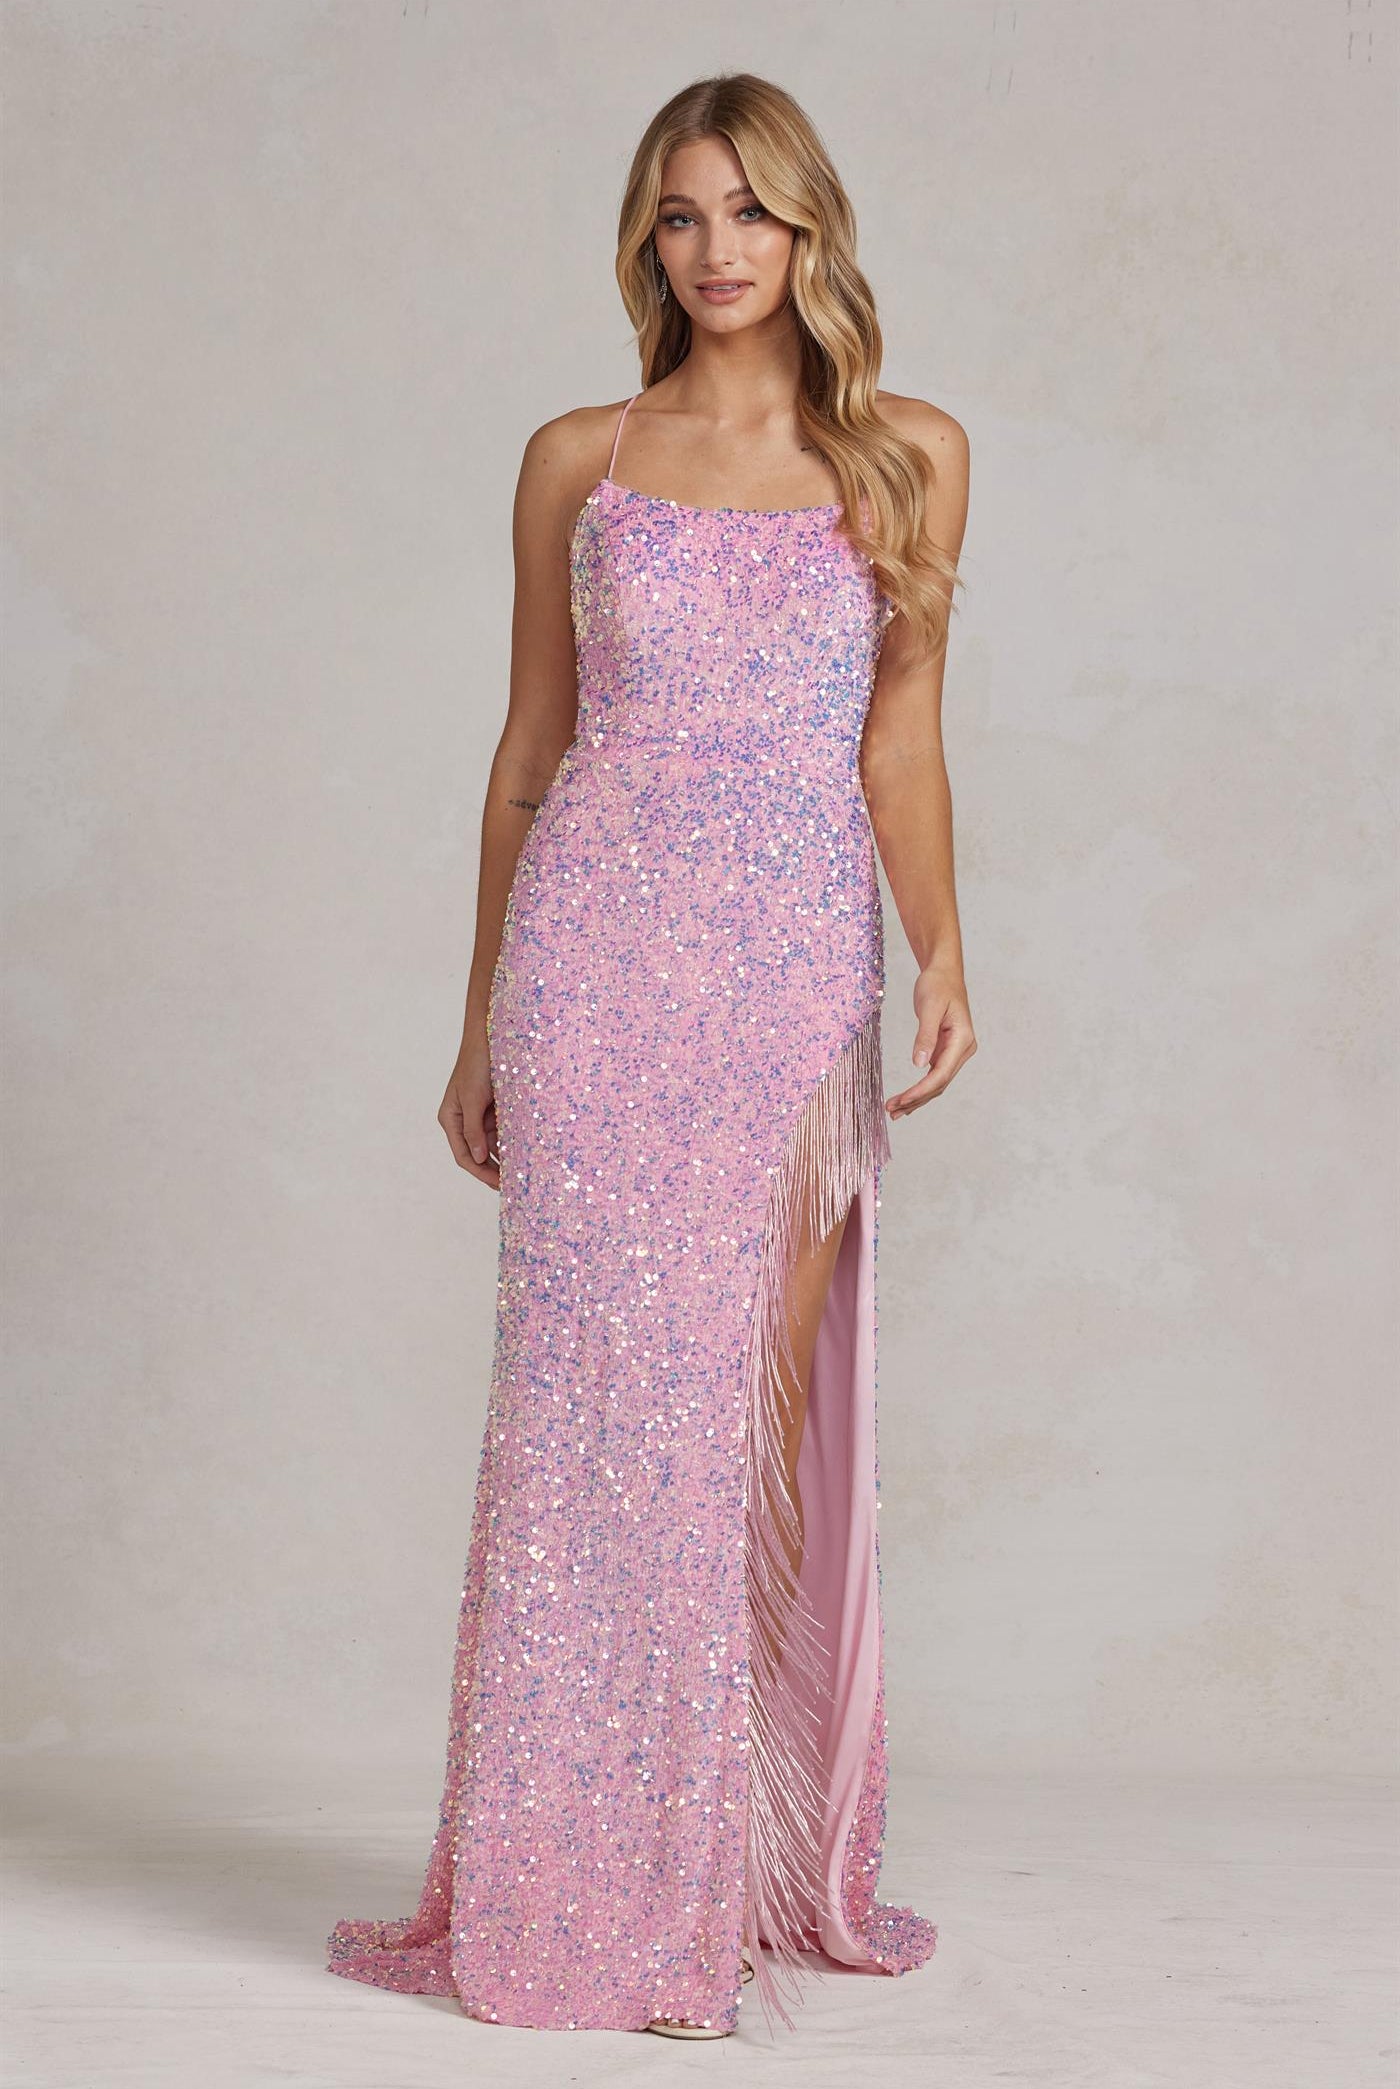 Embroidered Lace Spaghetti Straps Deep Side Slit Long Evening Dress NXT1209-Prom Dress-smcfashion.com